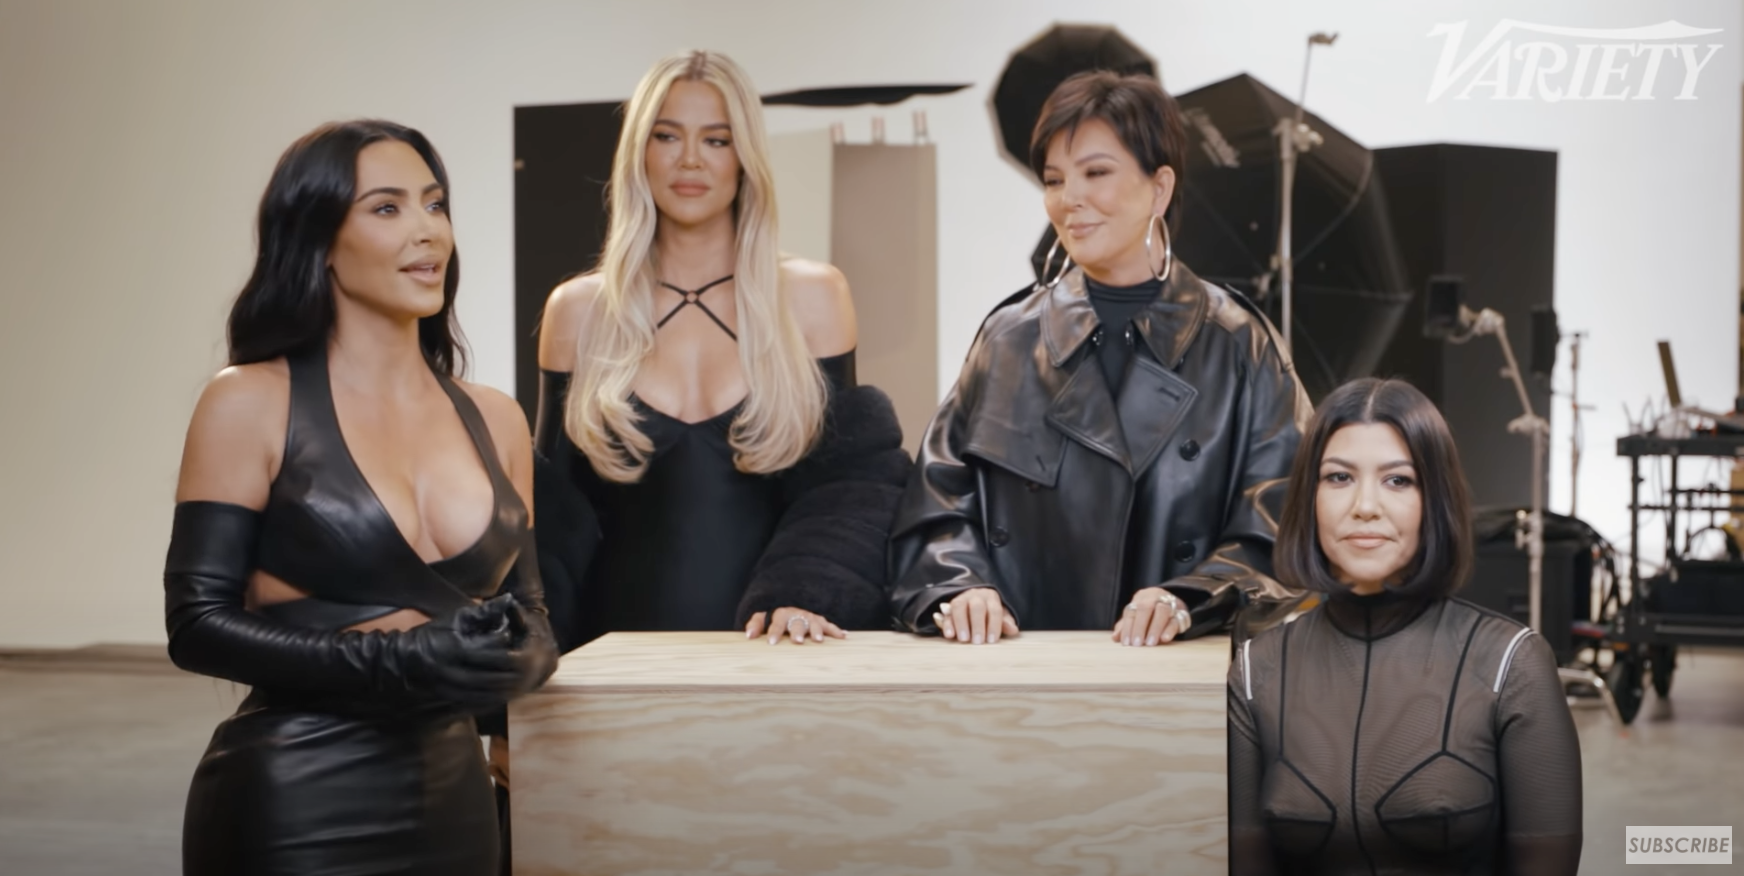 Kim Kardashian's Business Advice To Women Sparks Backlash